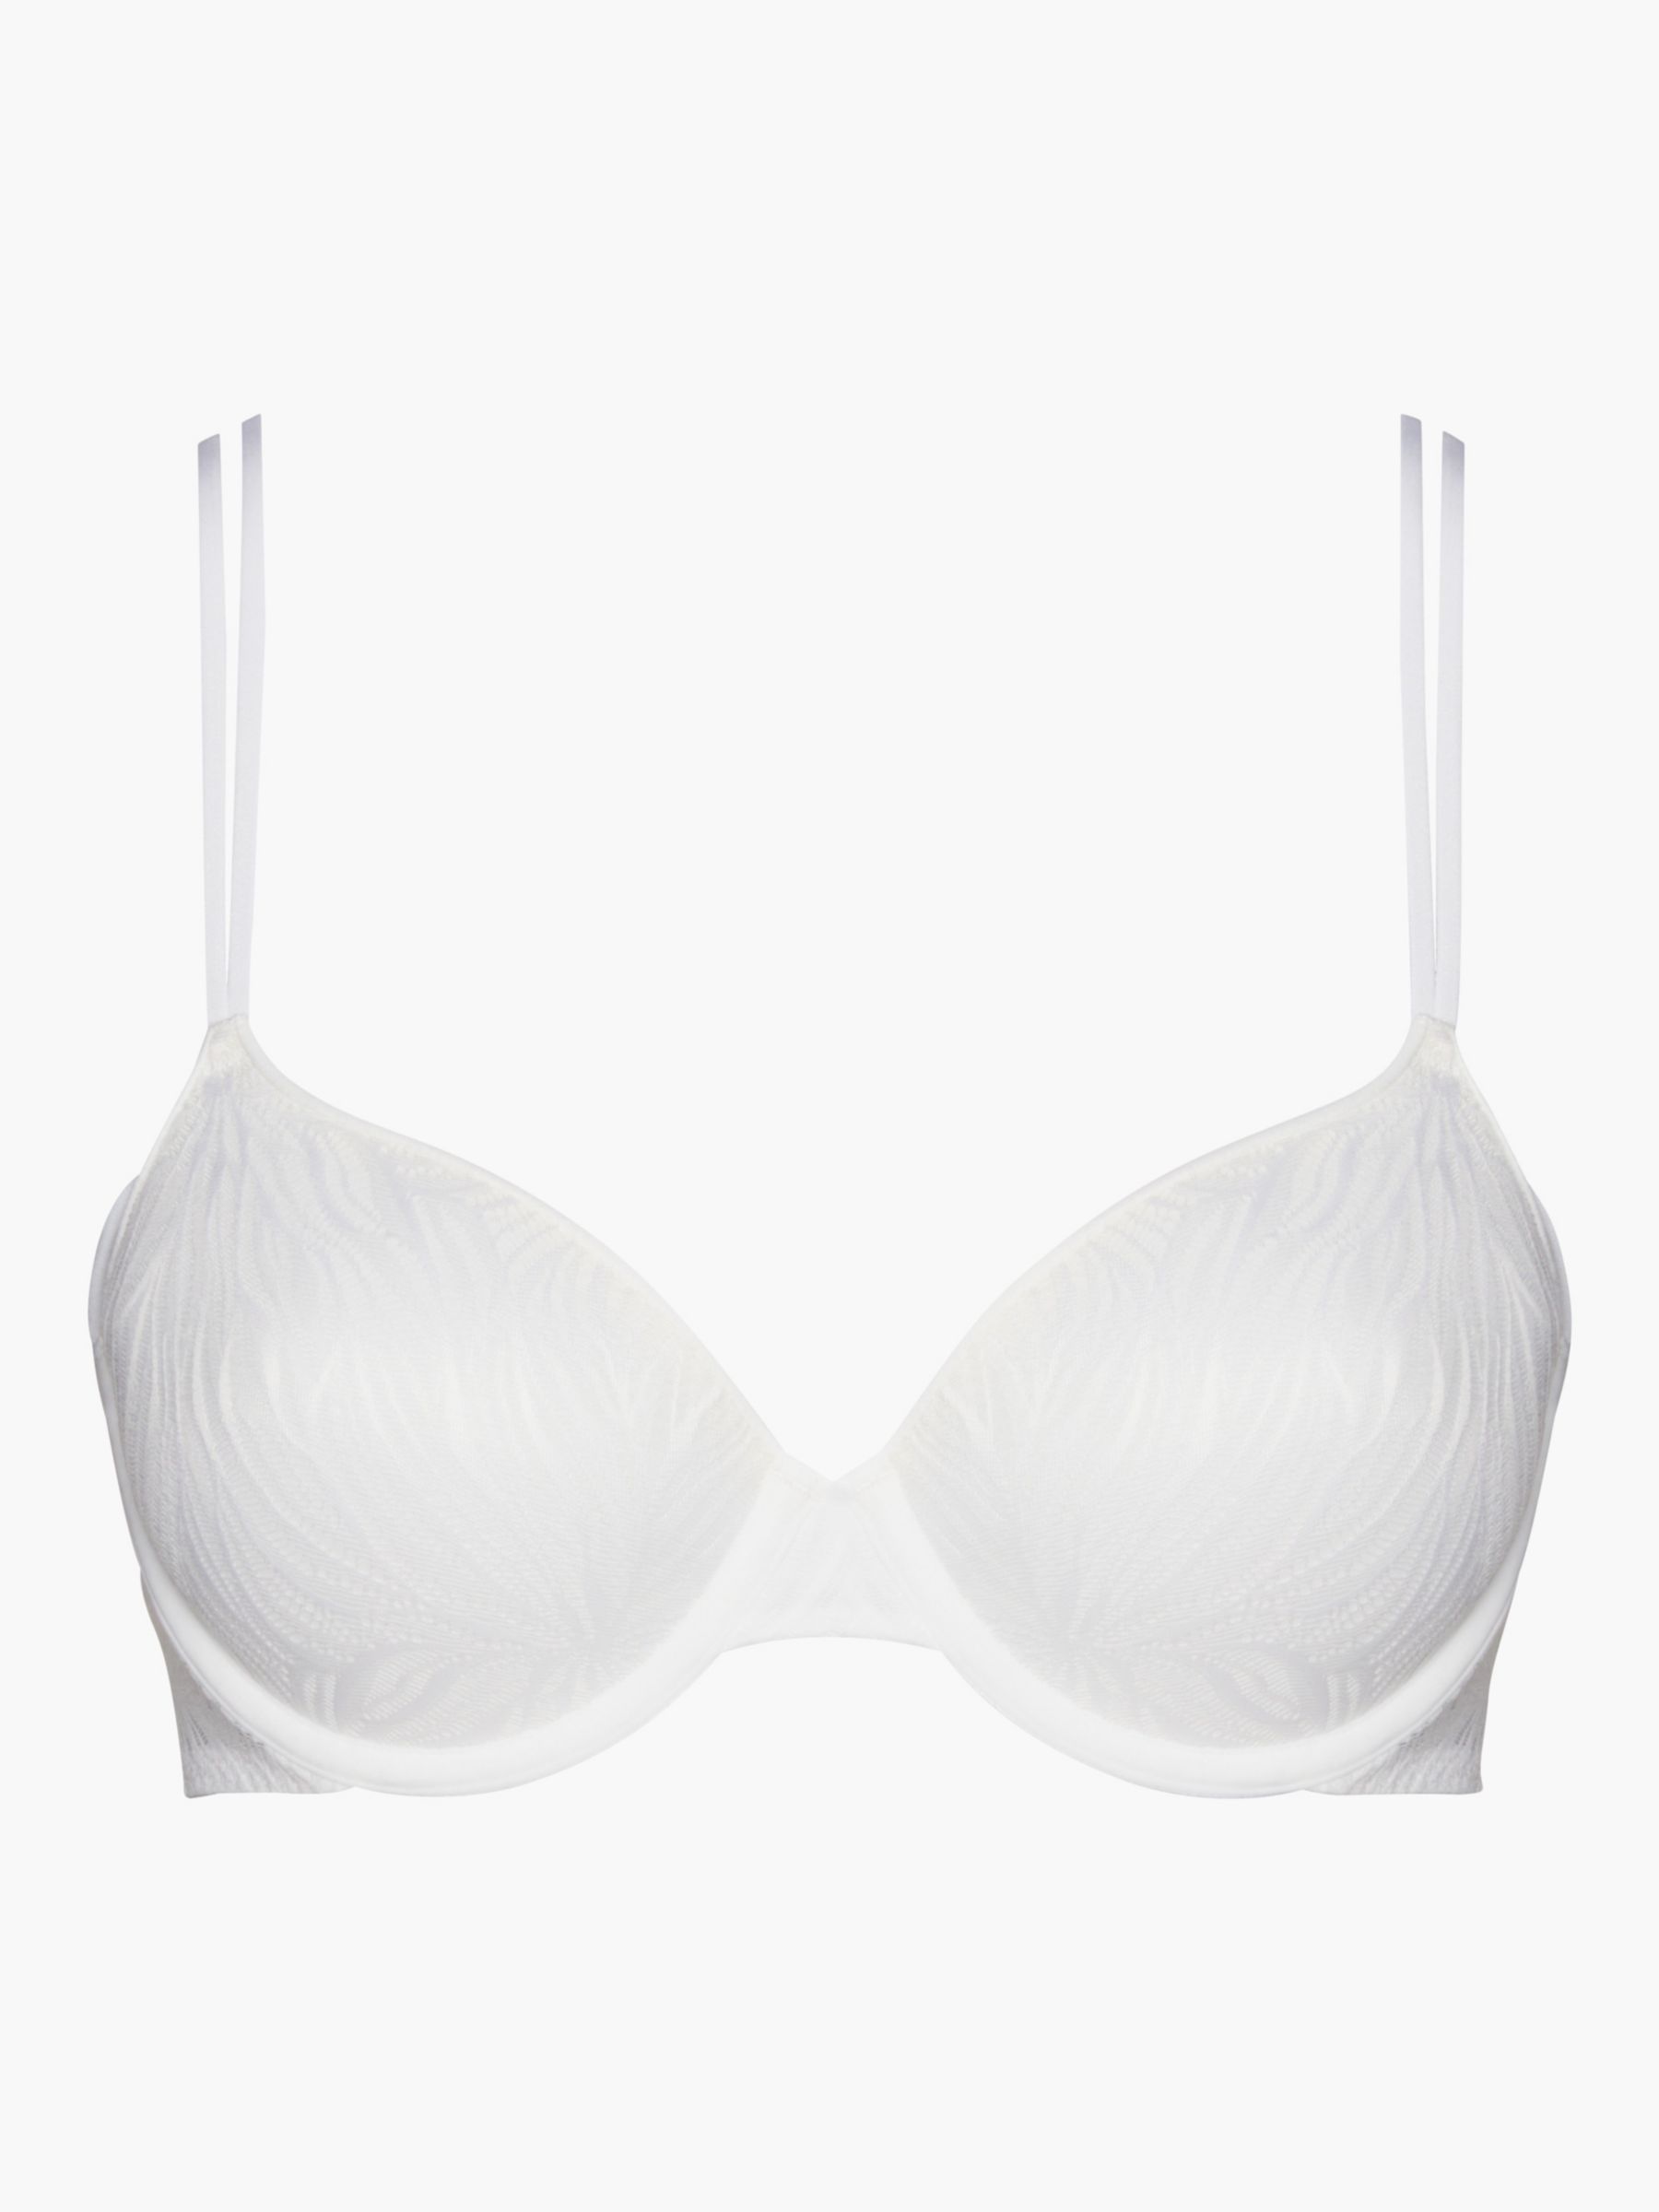 Calvin Klein Sheer Marquisette Lace Bra, White, 34B